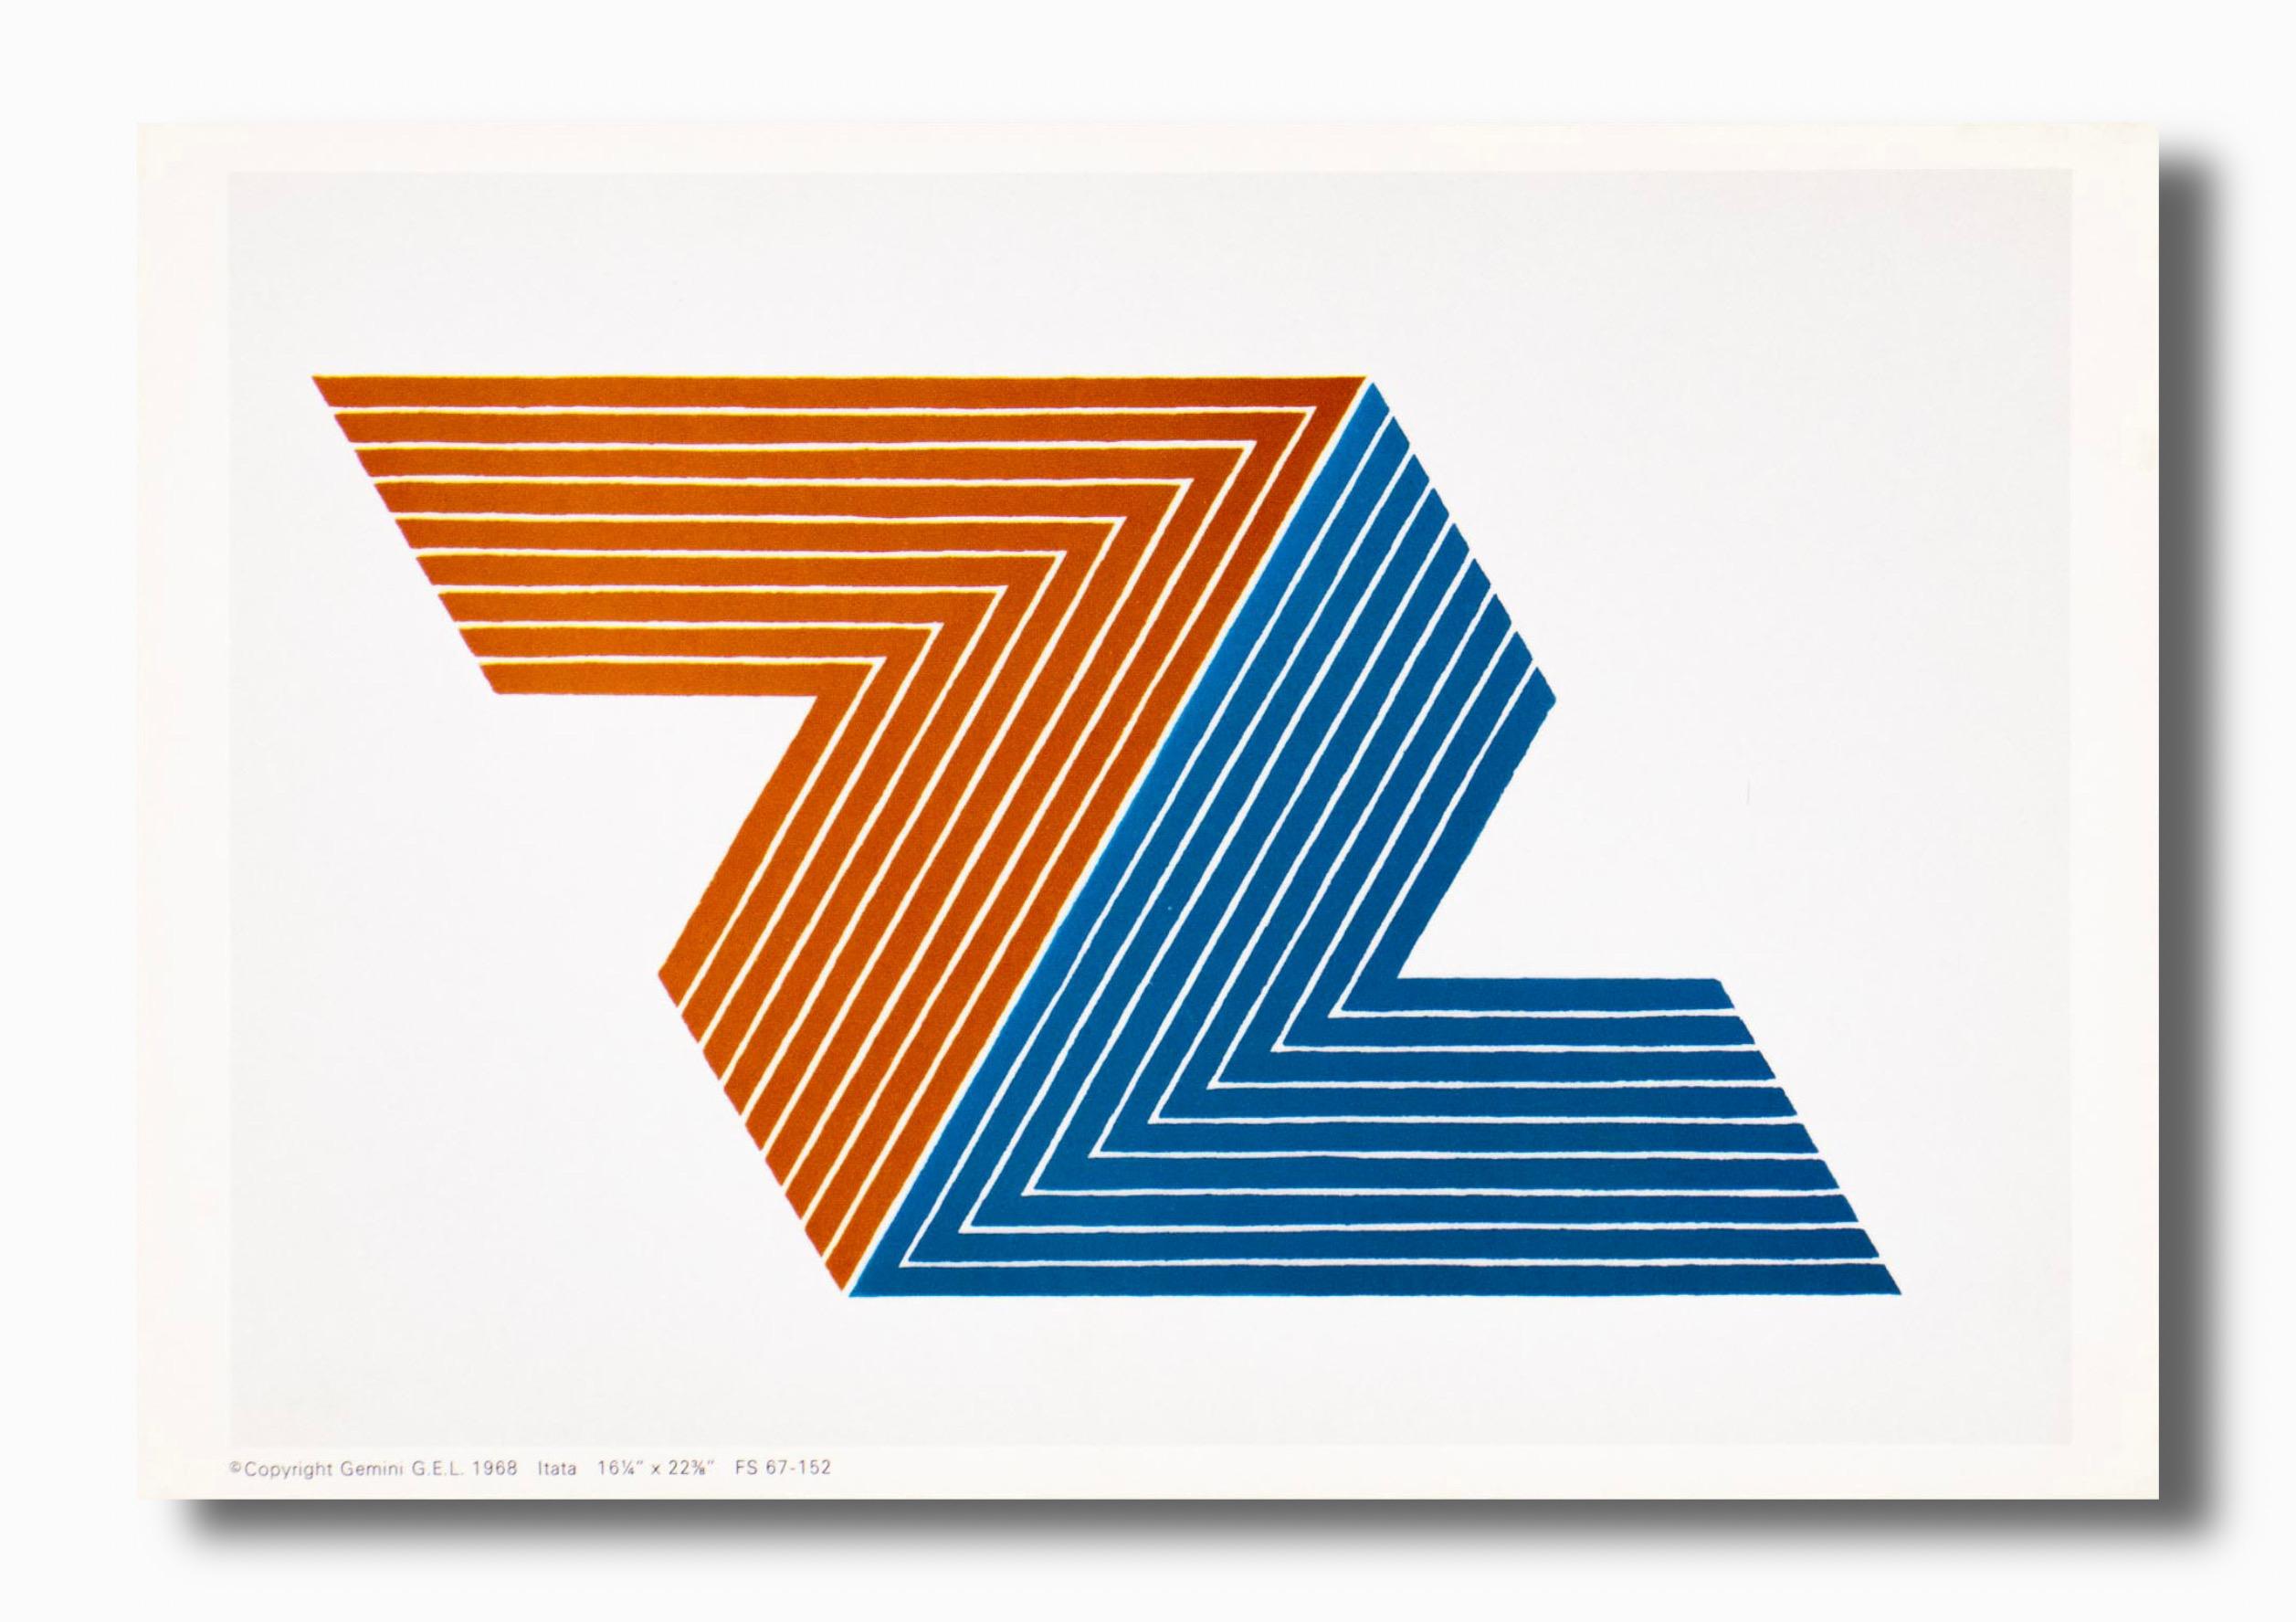 Frank Stella Abstract Print - The V Series - Complete 1960s Gemini G.E.L. Portfolio